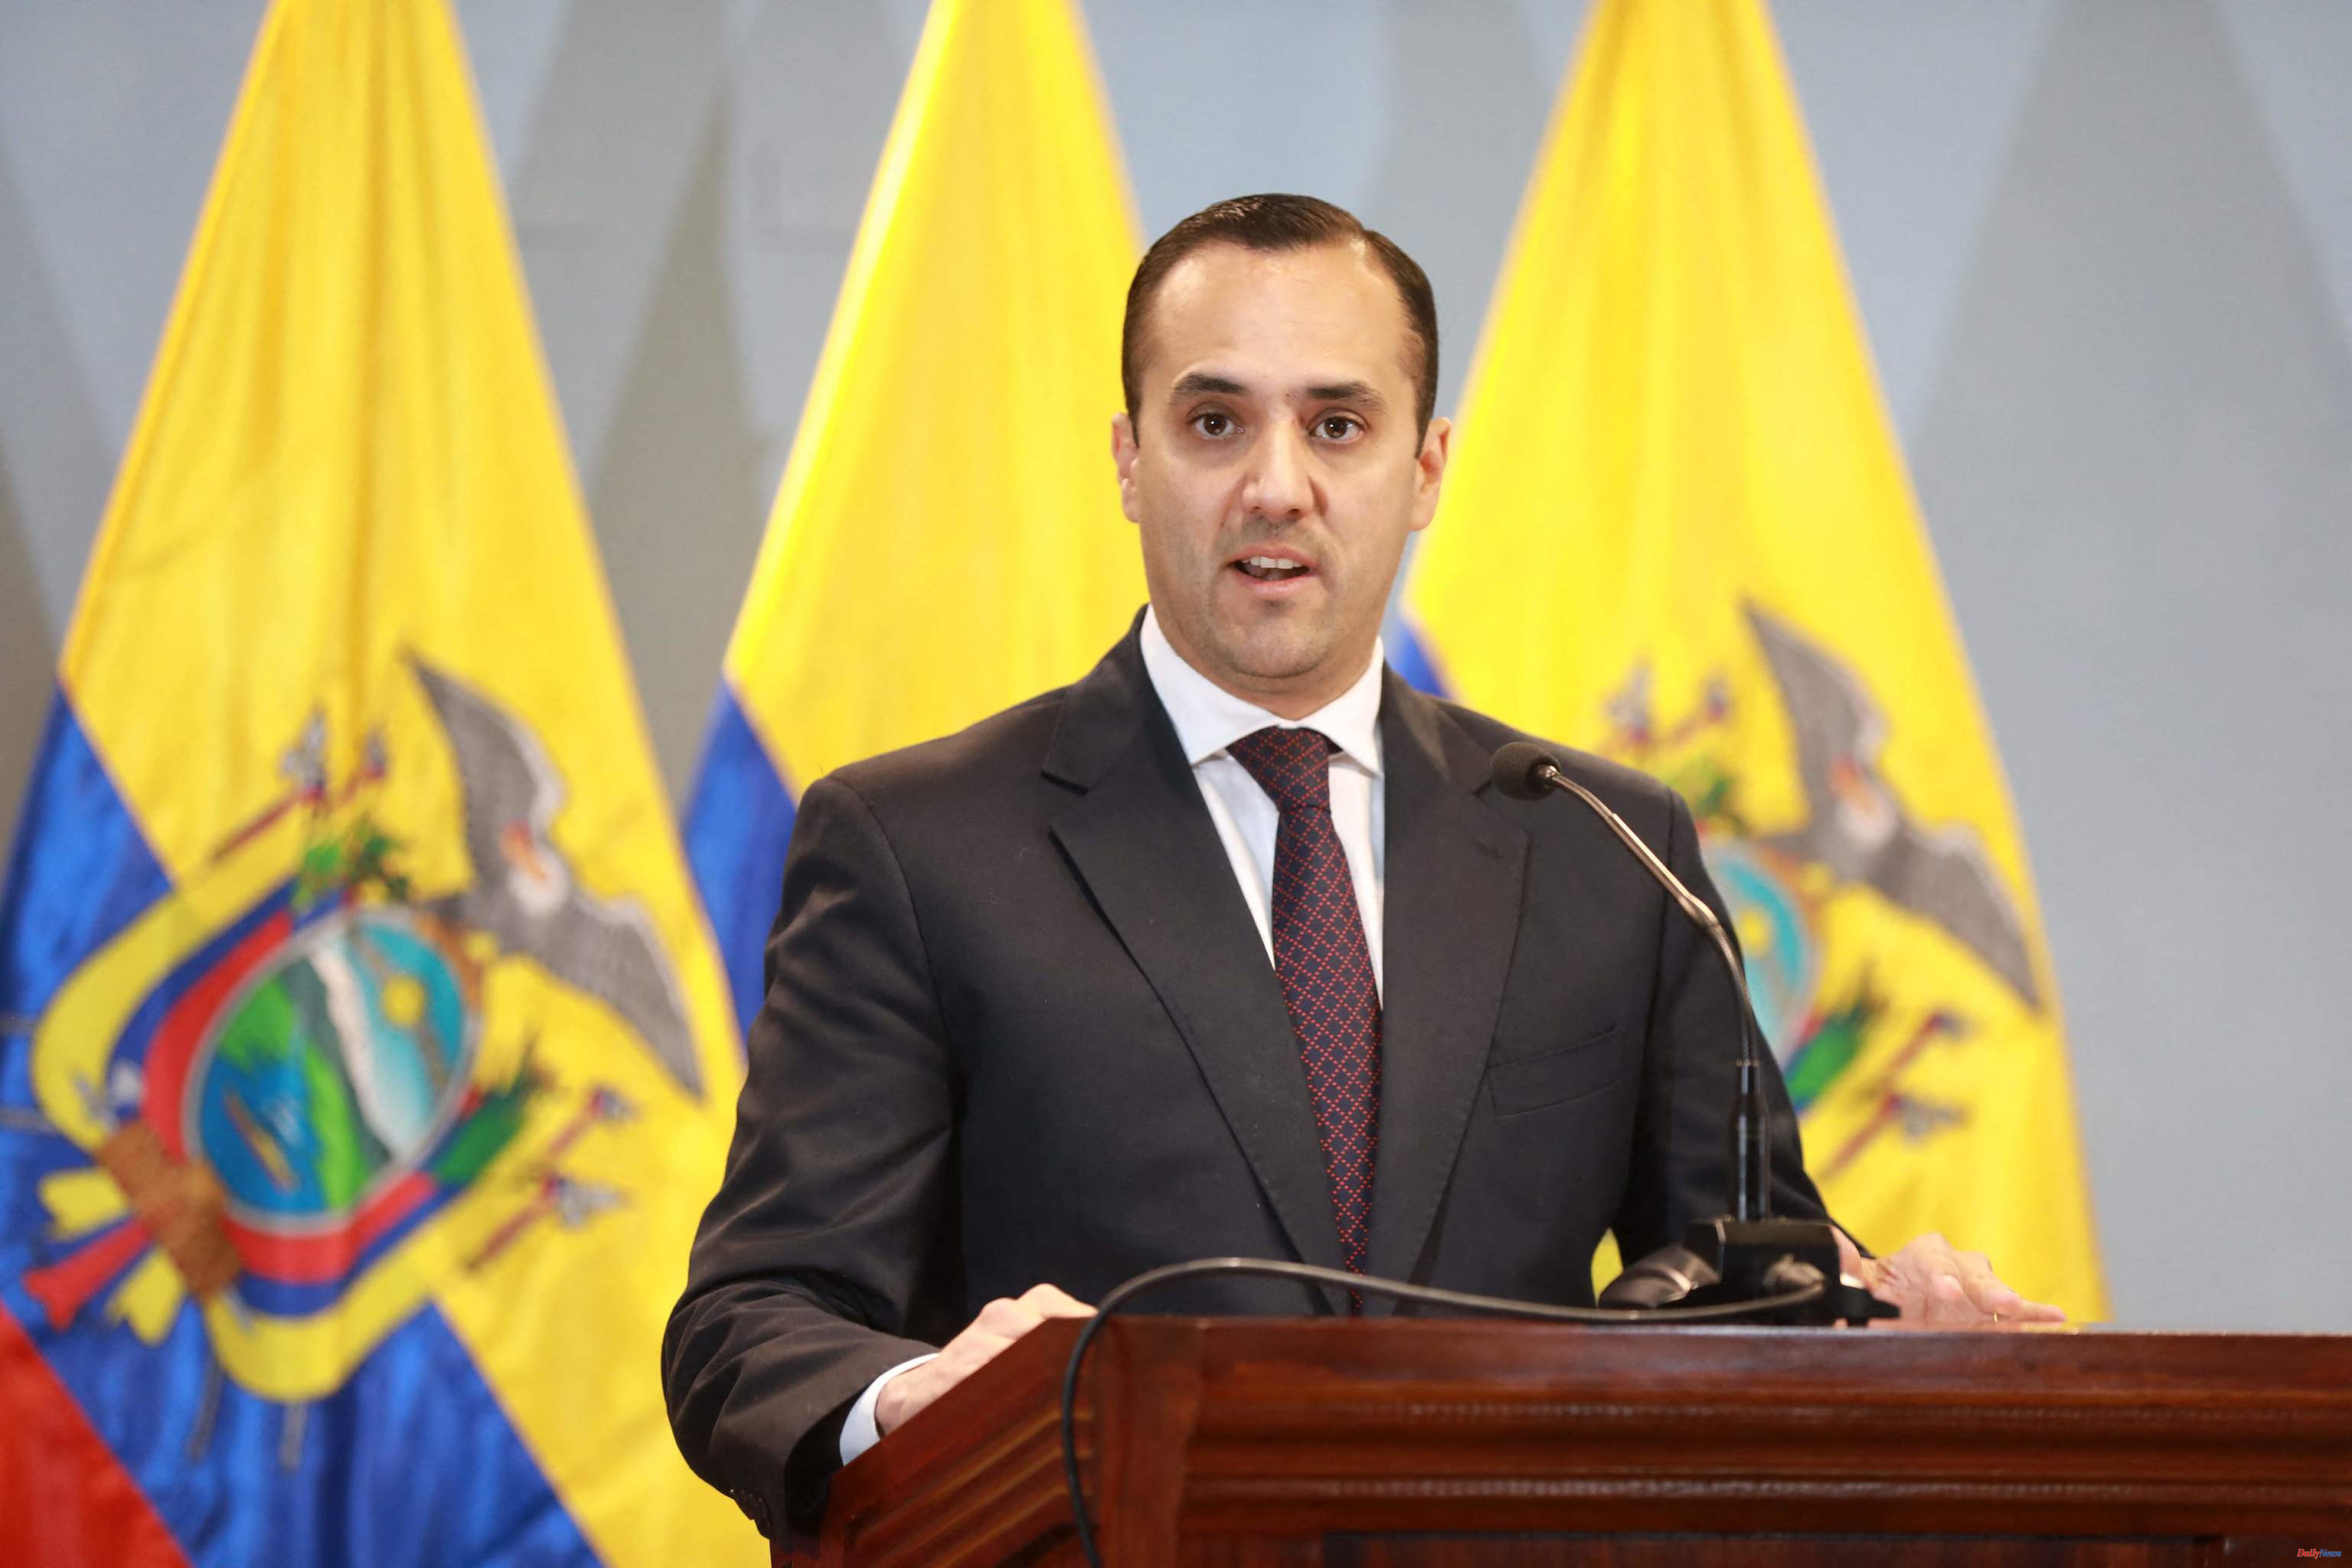 Latin America Ecuador's Foreign Minister resigns